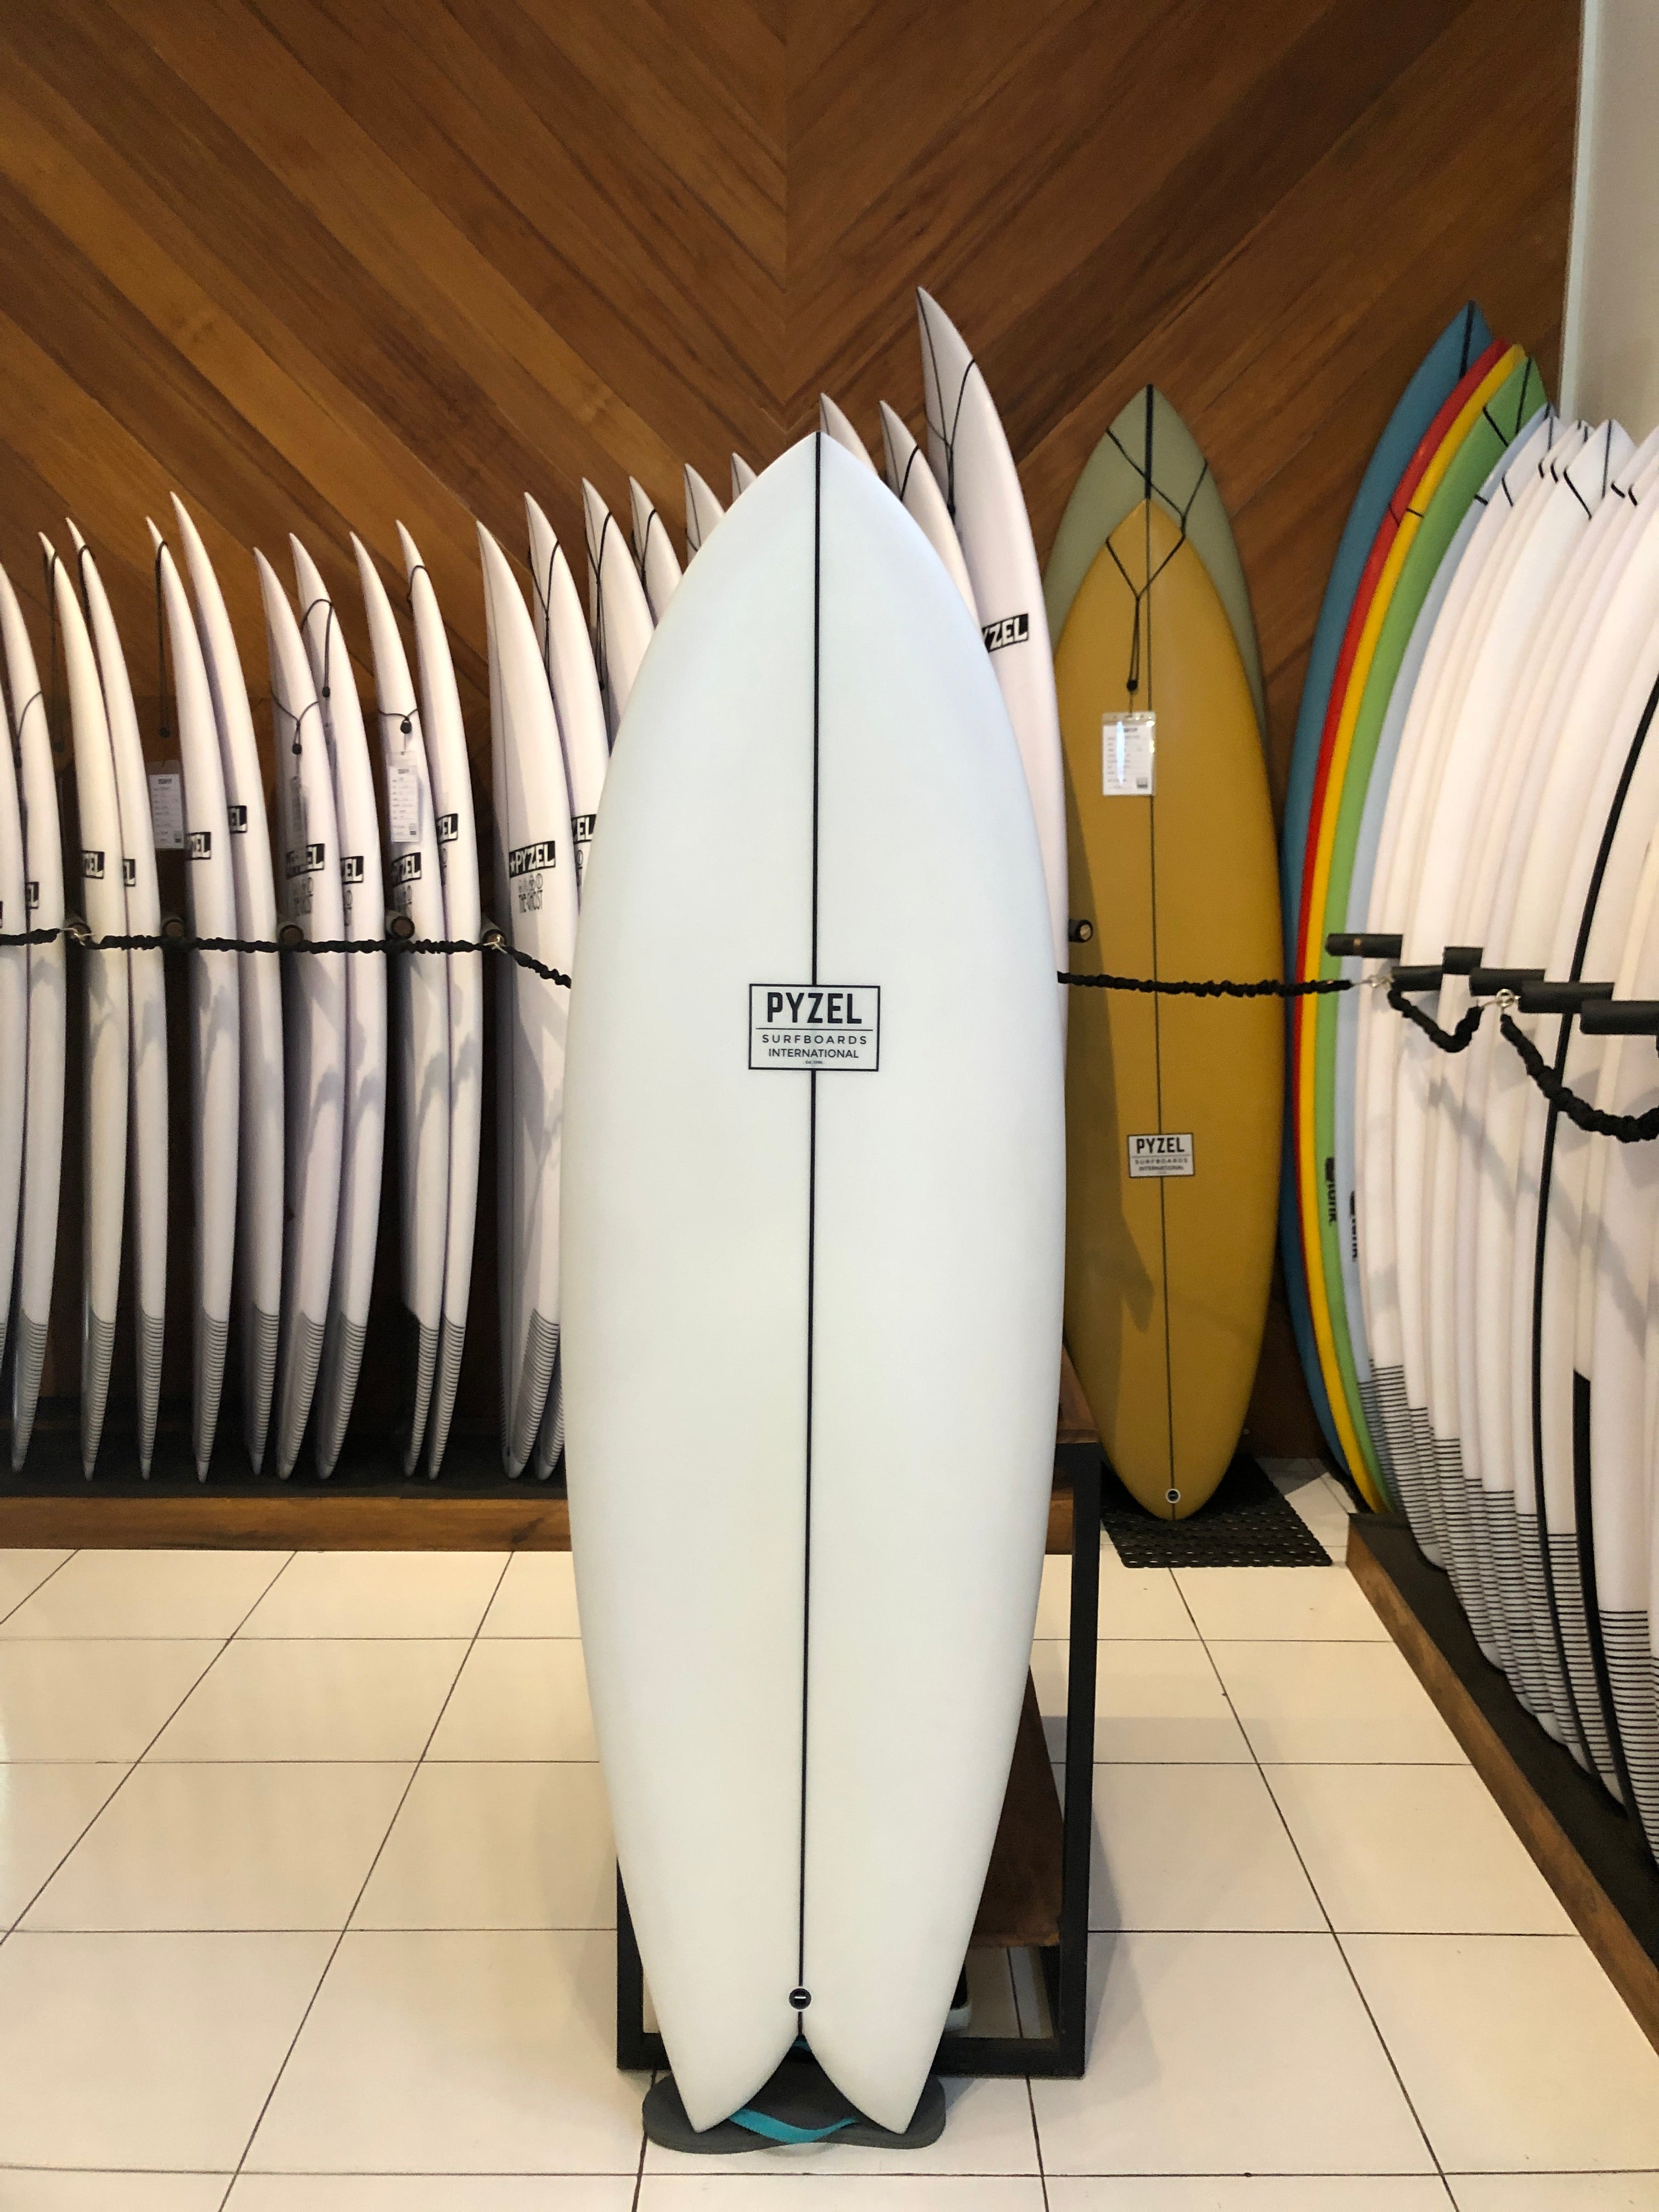 Pyzel Surfboards Bali - BGS Bali Surf Shop – BGSBali